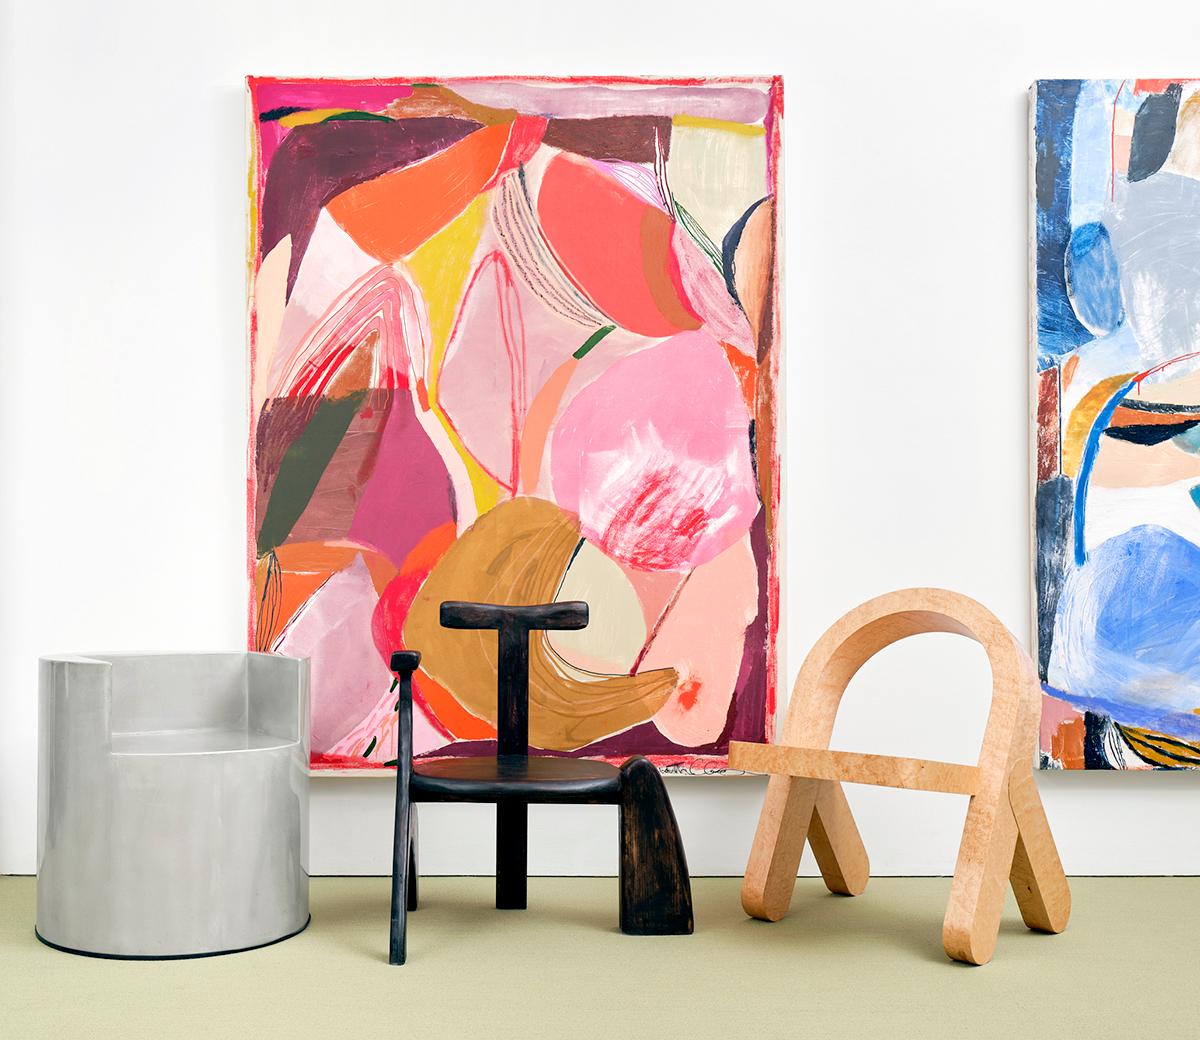 Foldont Chair in Plywood with Birdseye Maple Veneer by JUMBO NYC 2